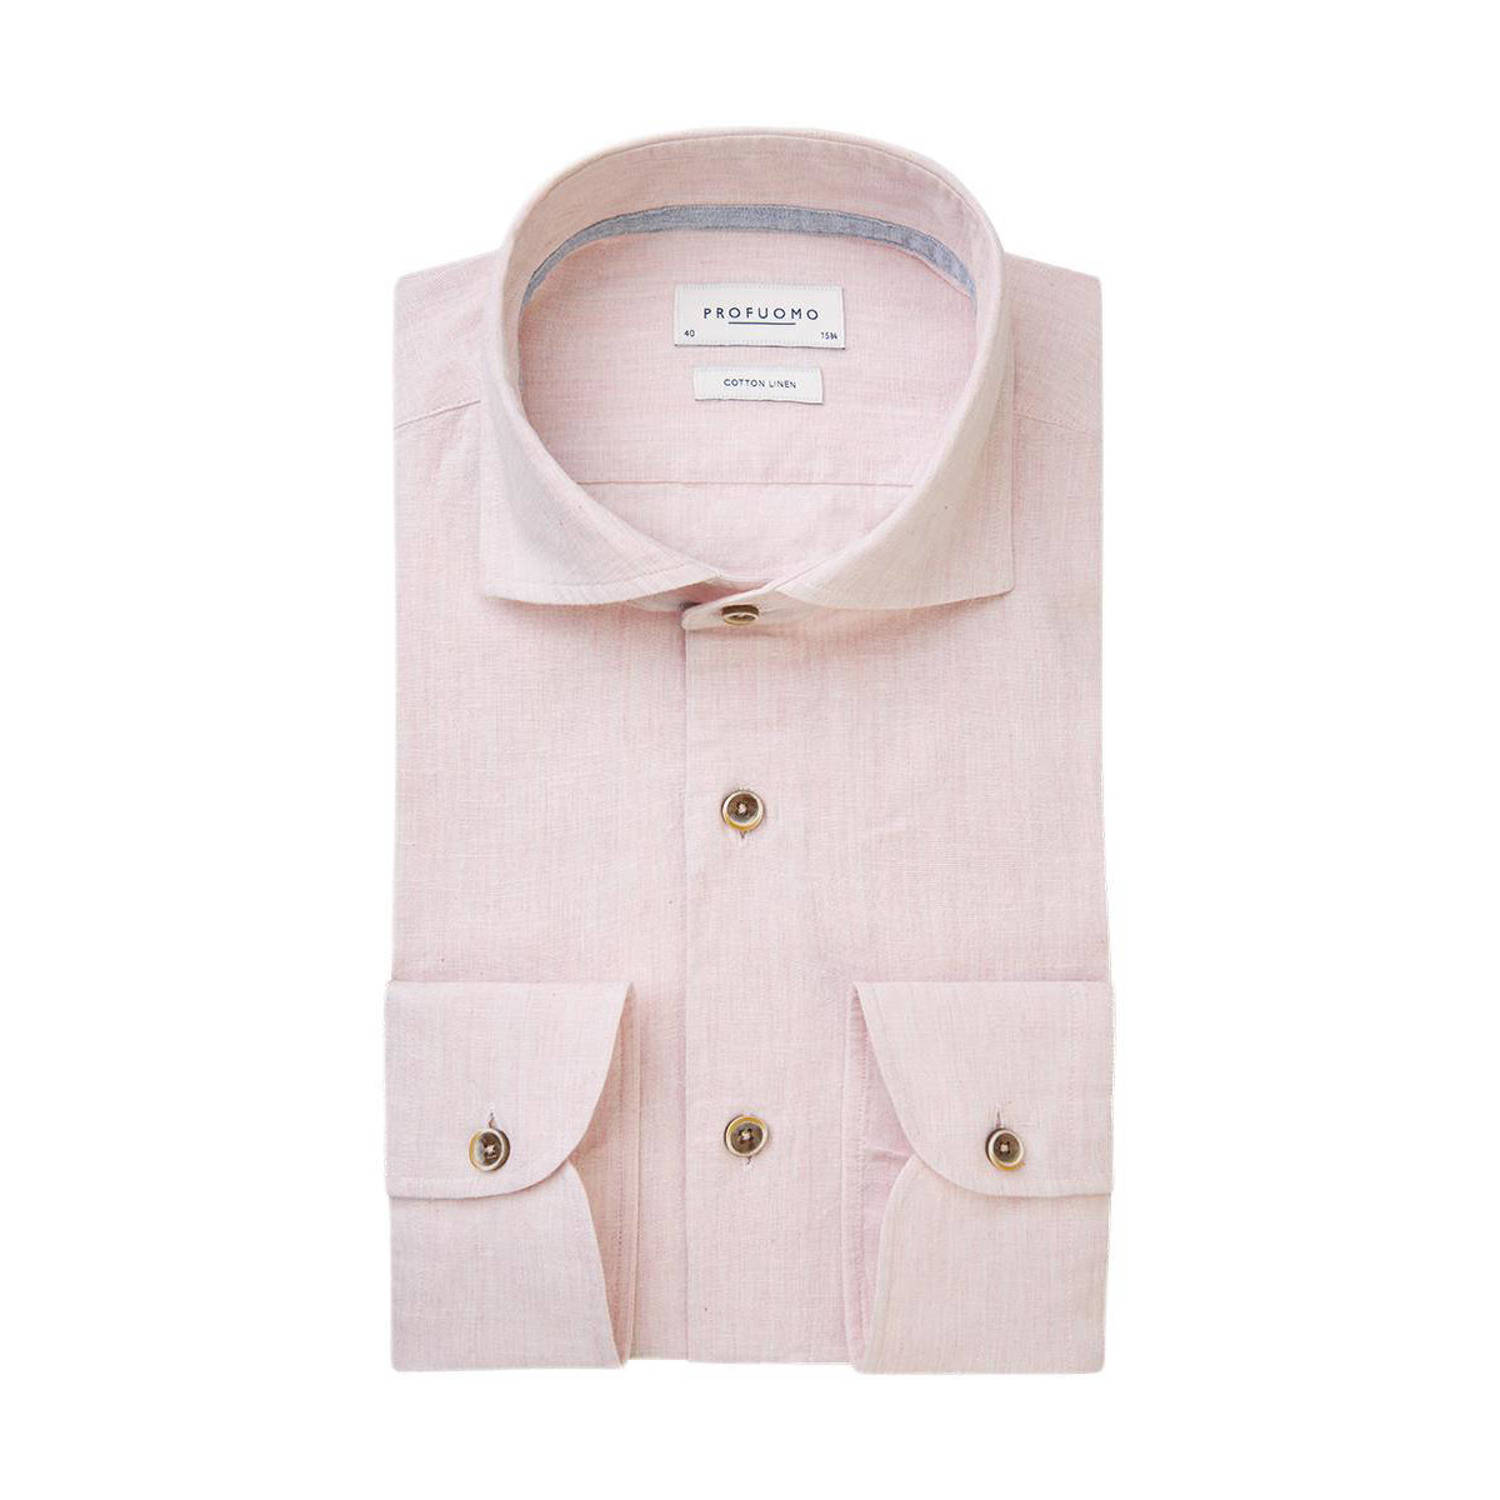 Profuomo slim fit strijkvrij overhemd pink